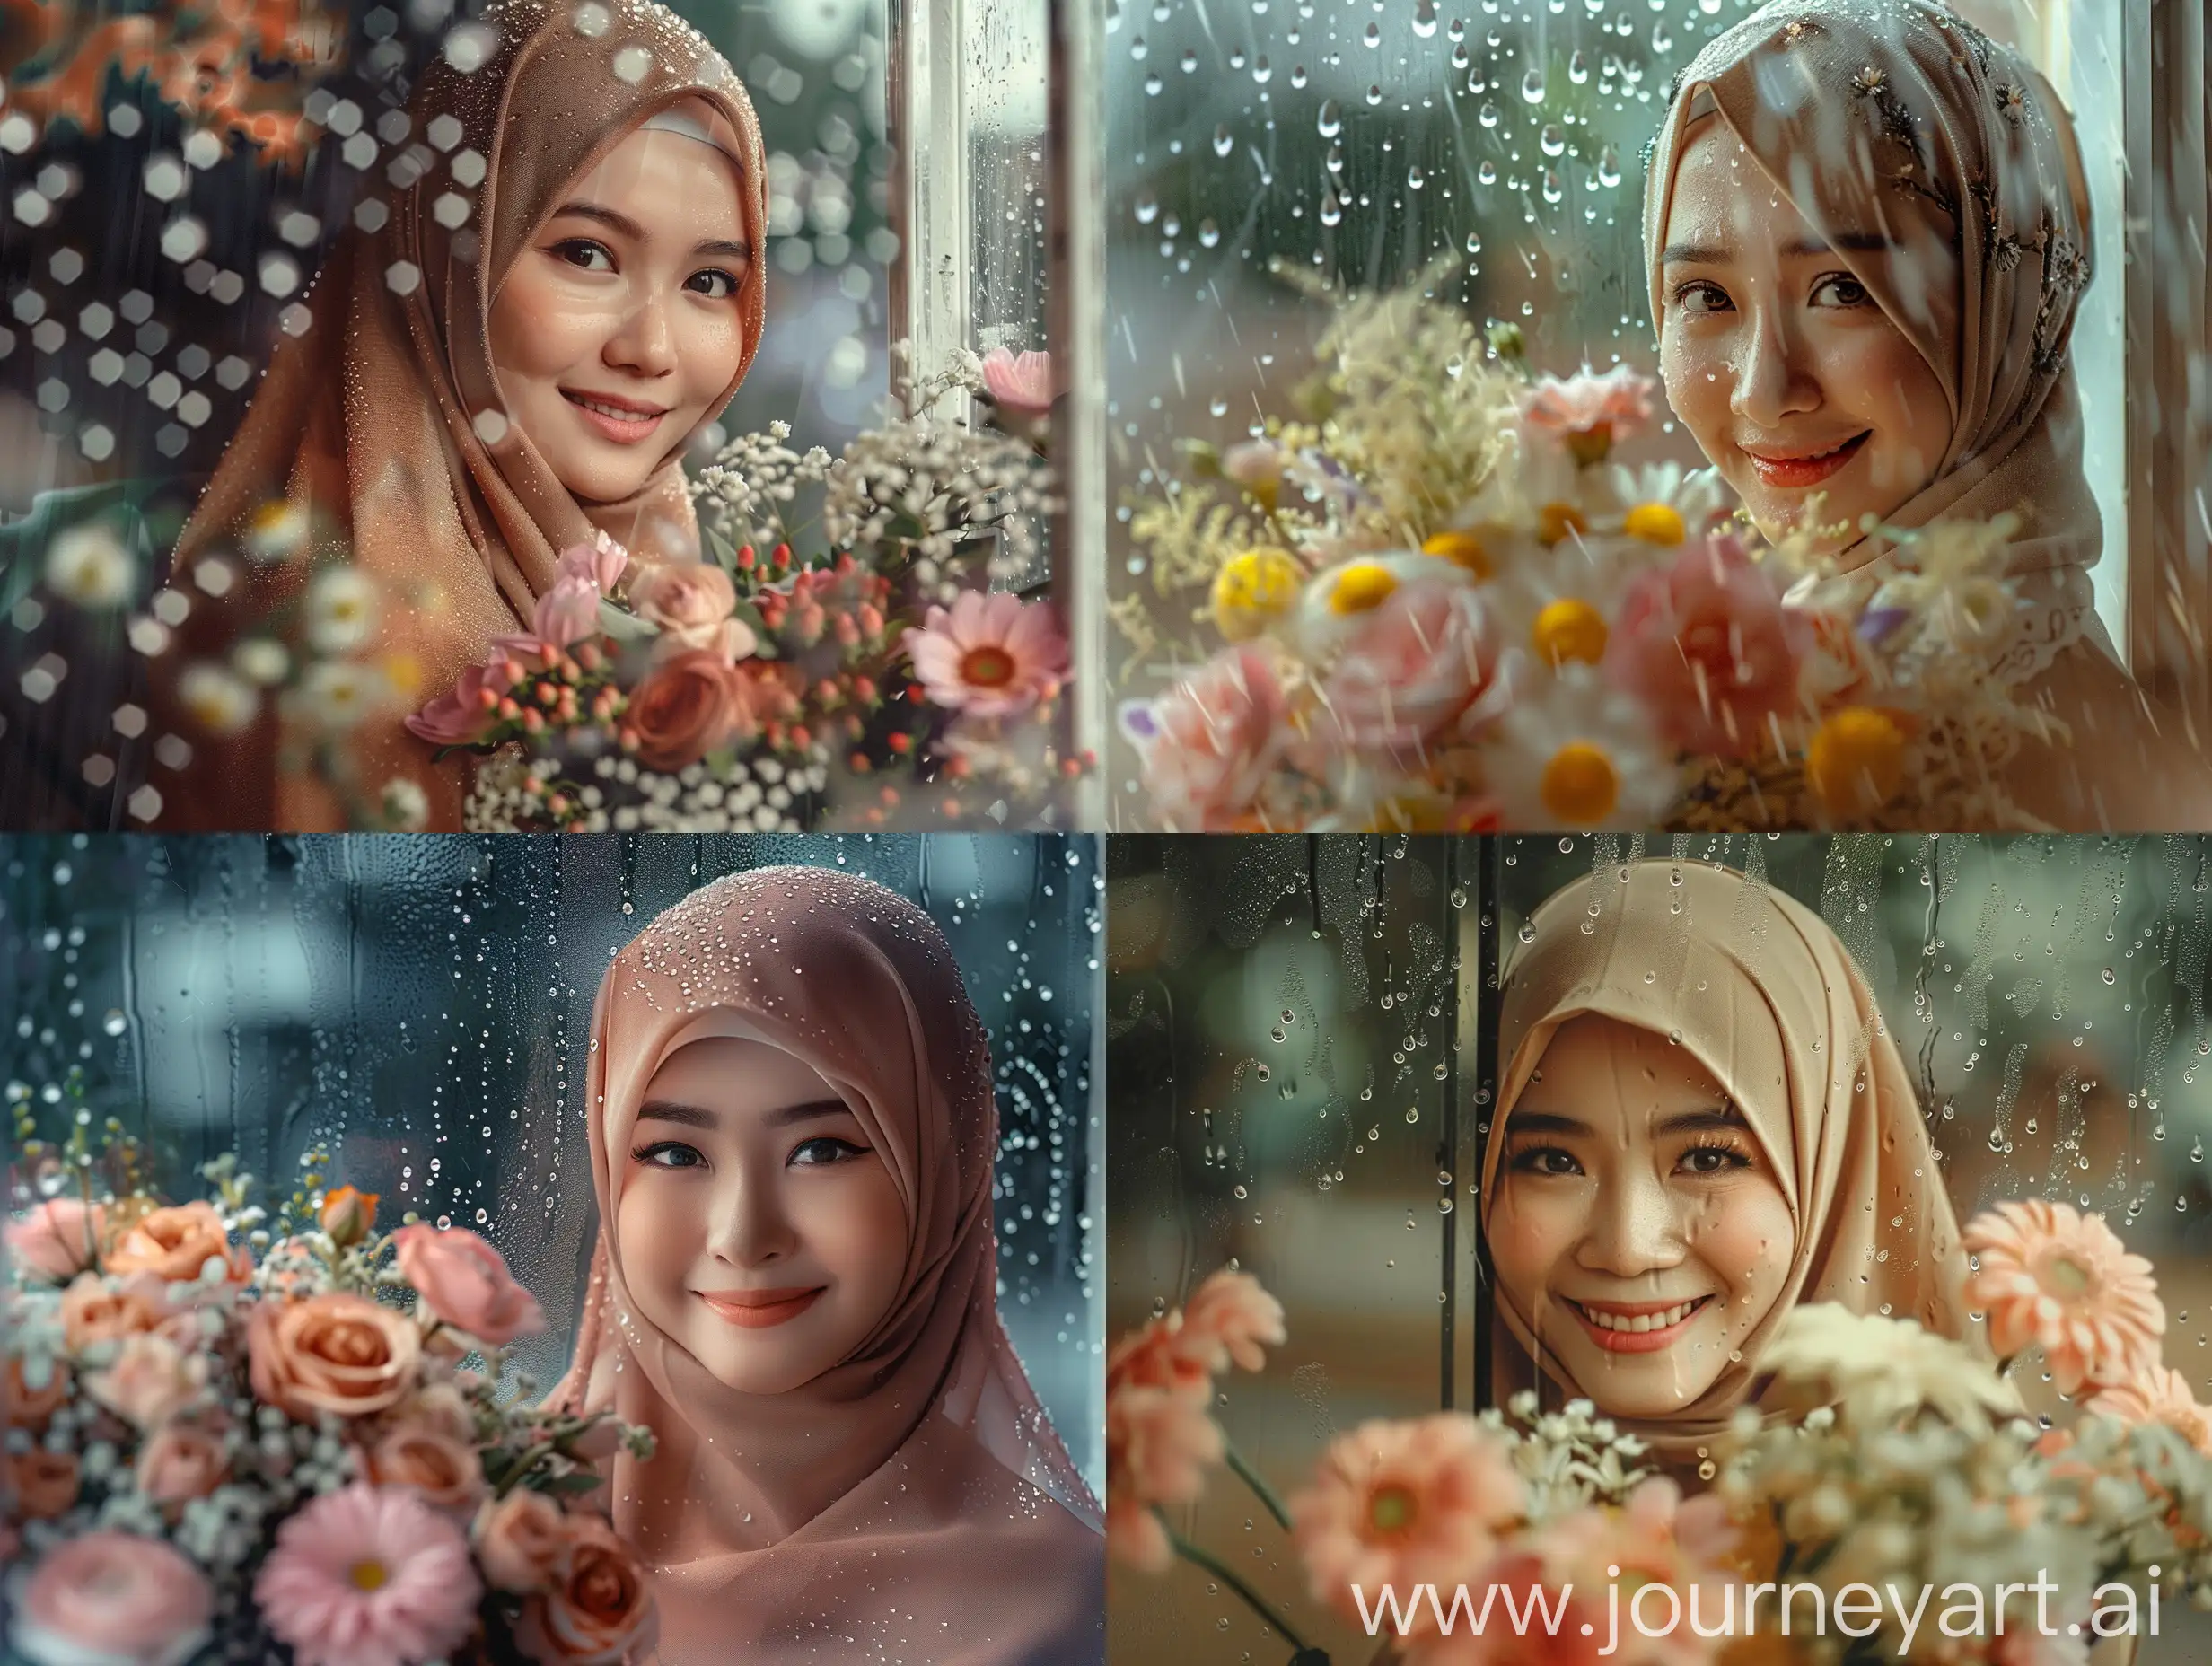 seorang perempuan Indonesia berhijab sedang tersenyum manis di balik kaca jendela yang terkena tetesan air hujan, ada setangkai bunga, kualitas HD, realistis.